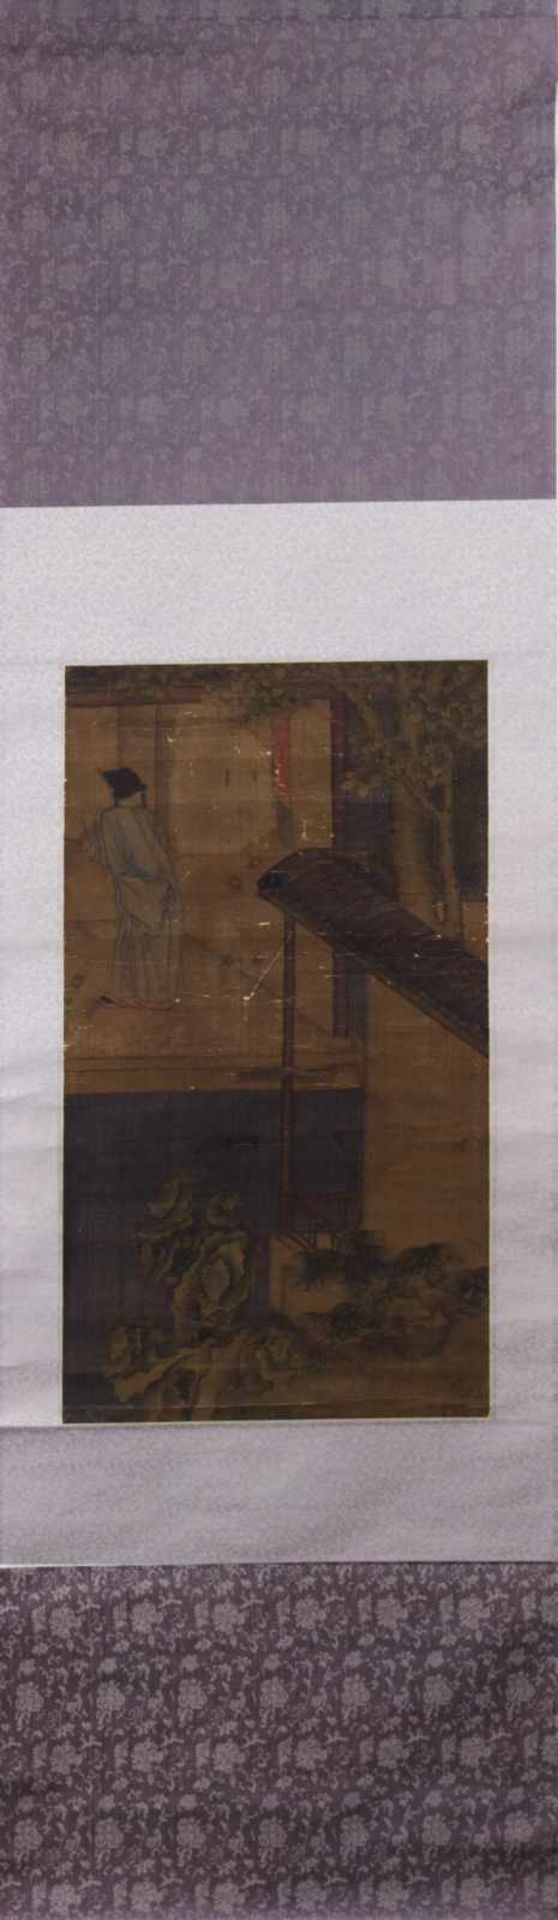 Rollbild China 18.Jhd. / Scrol painting, China 18th century Tuschmalerei auf Seide, rechts unten